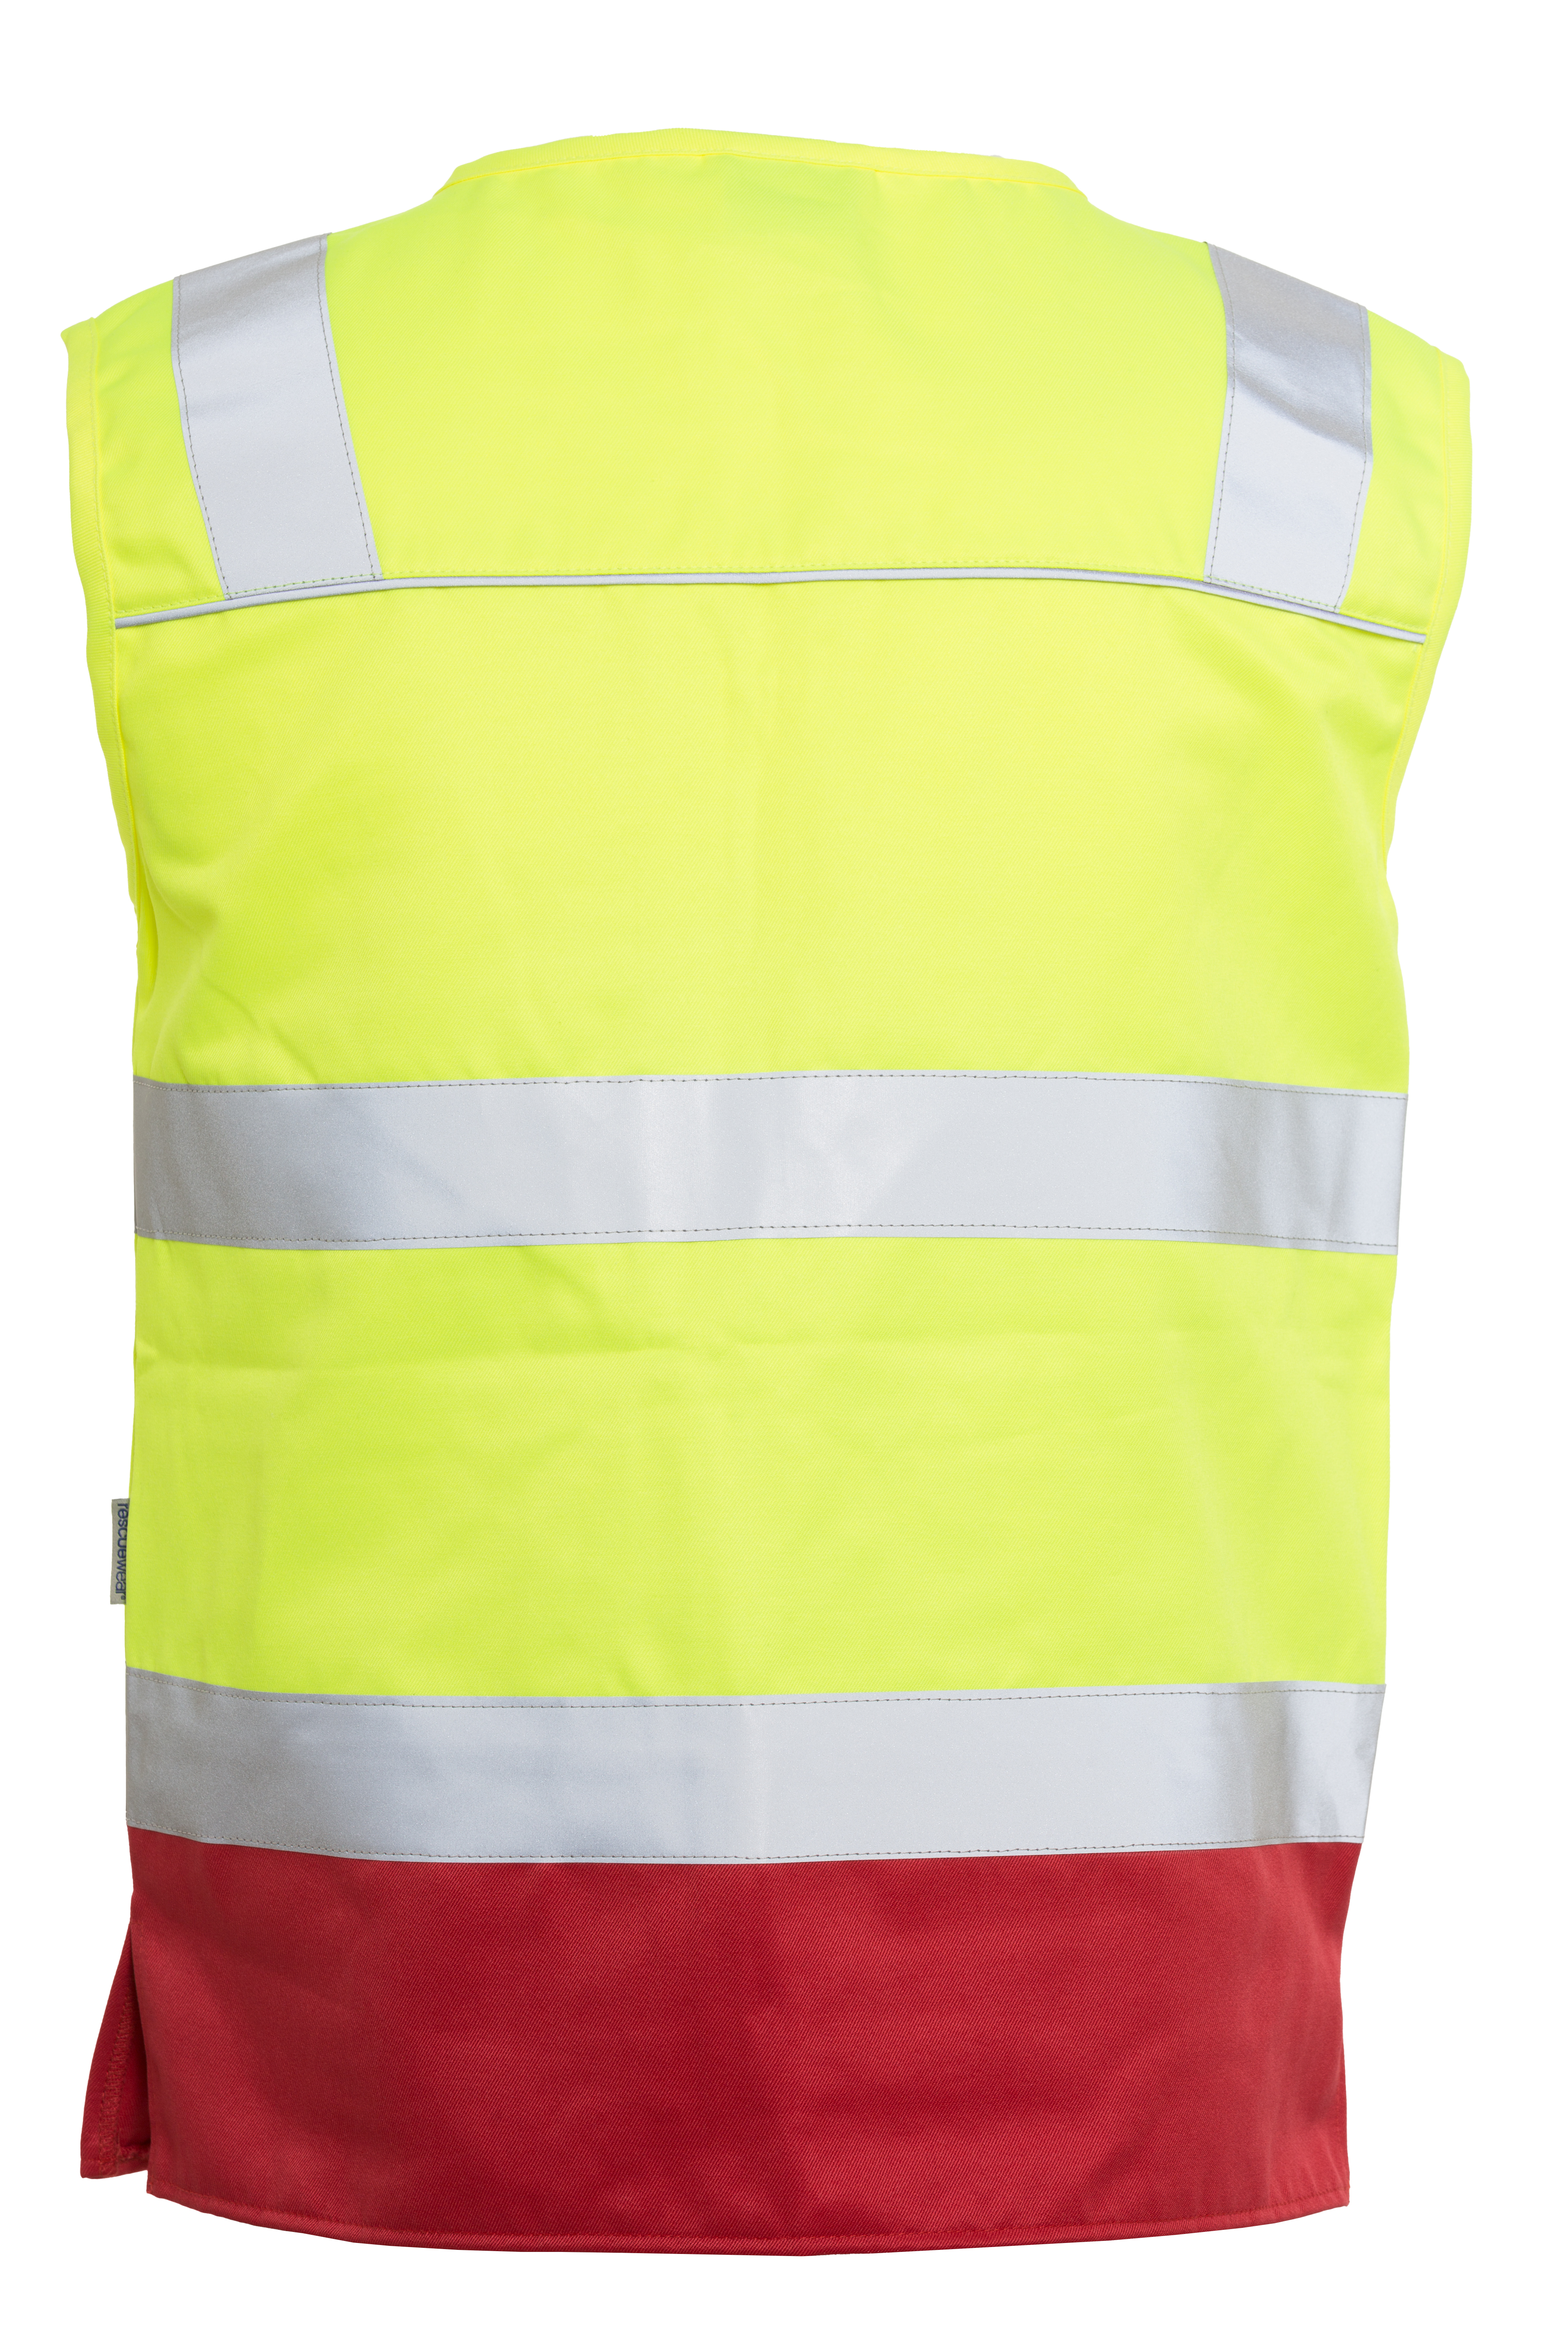 Rescuewear Sommerweste HiVis Klasse 1 Rot / Neon Gelb - XL